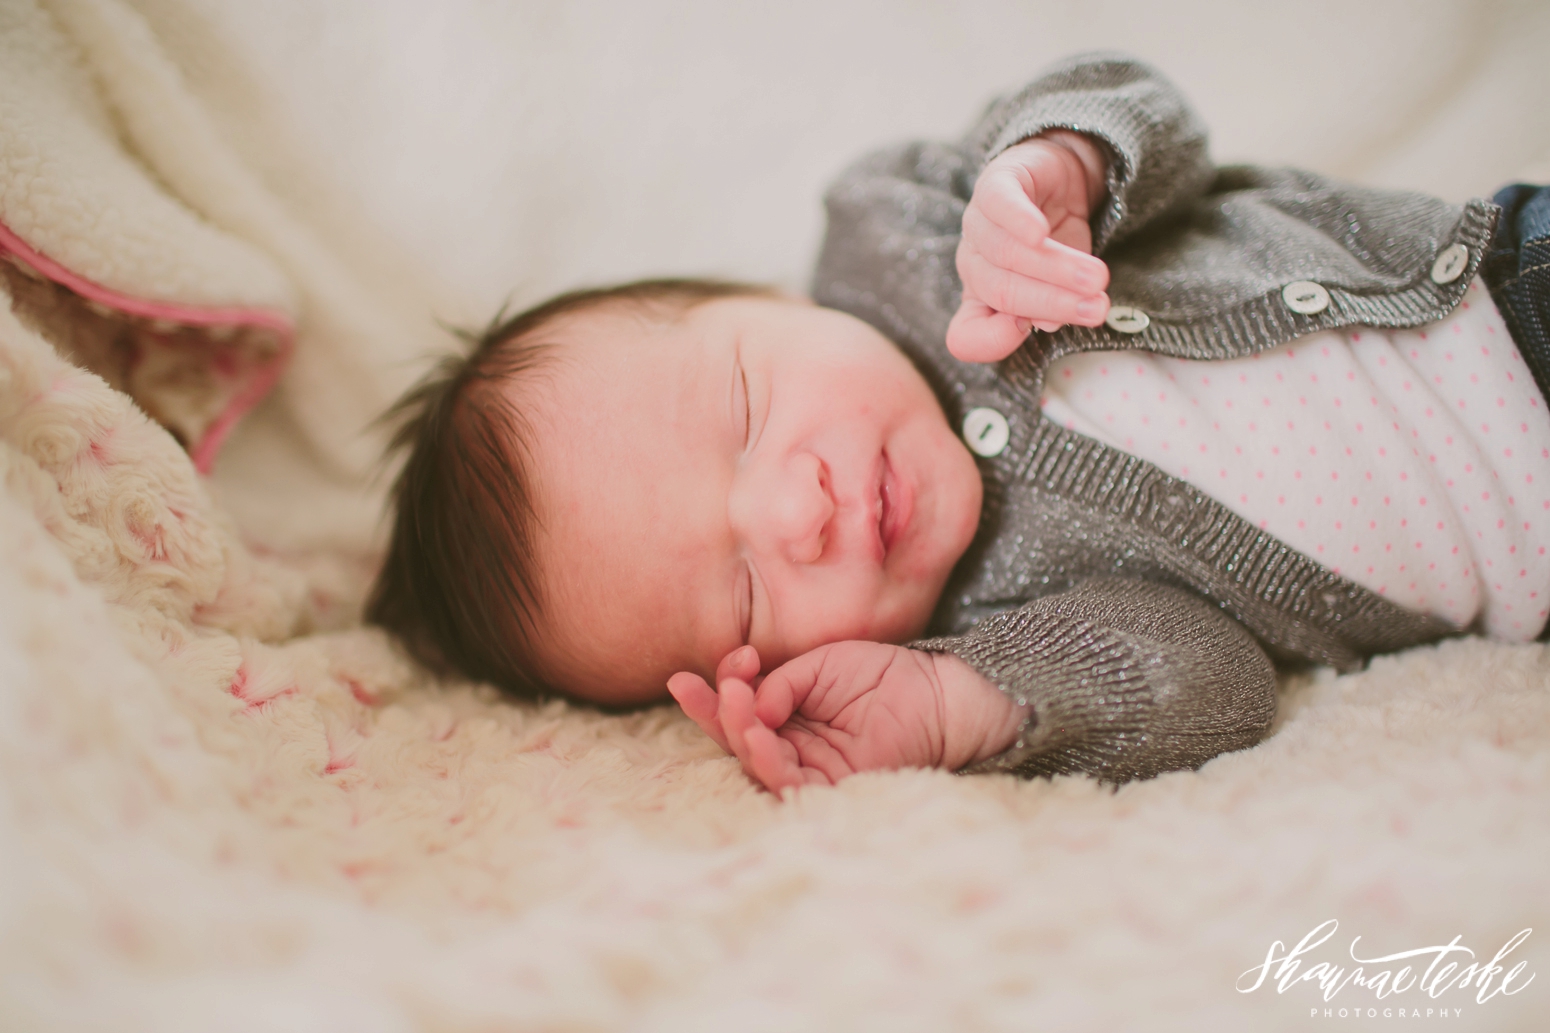 shaunae_teske_wisconsin_photographer_kinslee-newborn-7